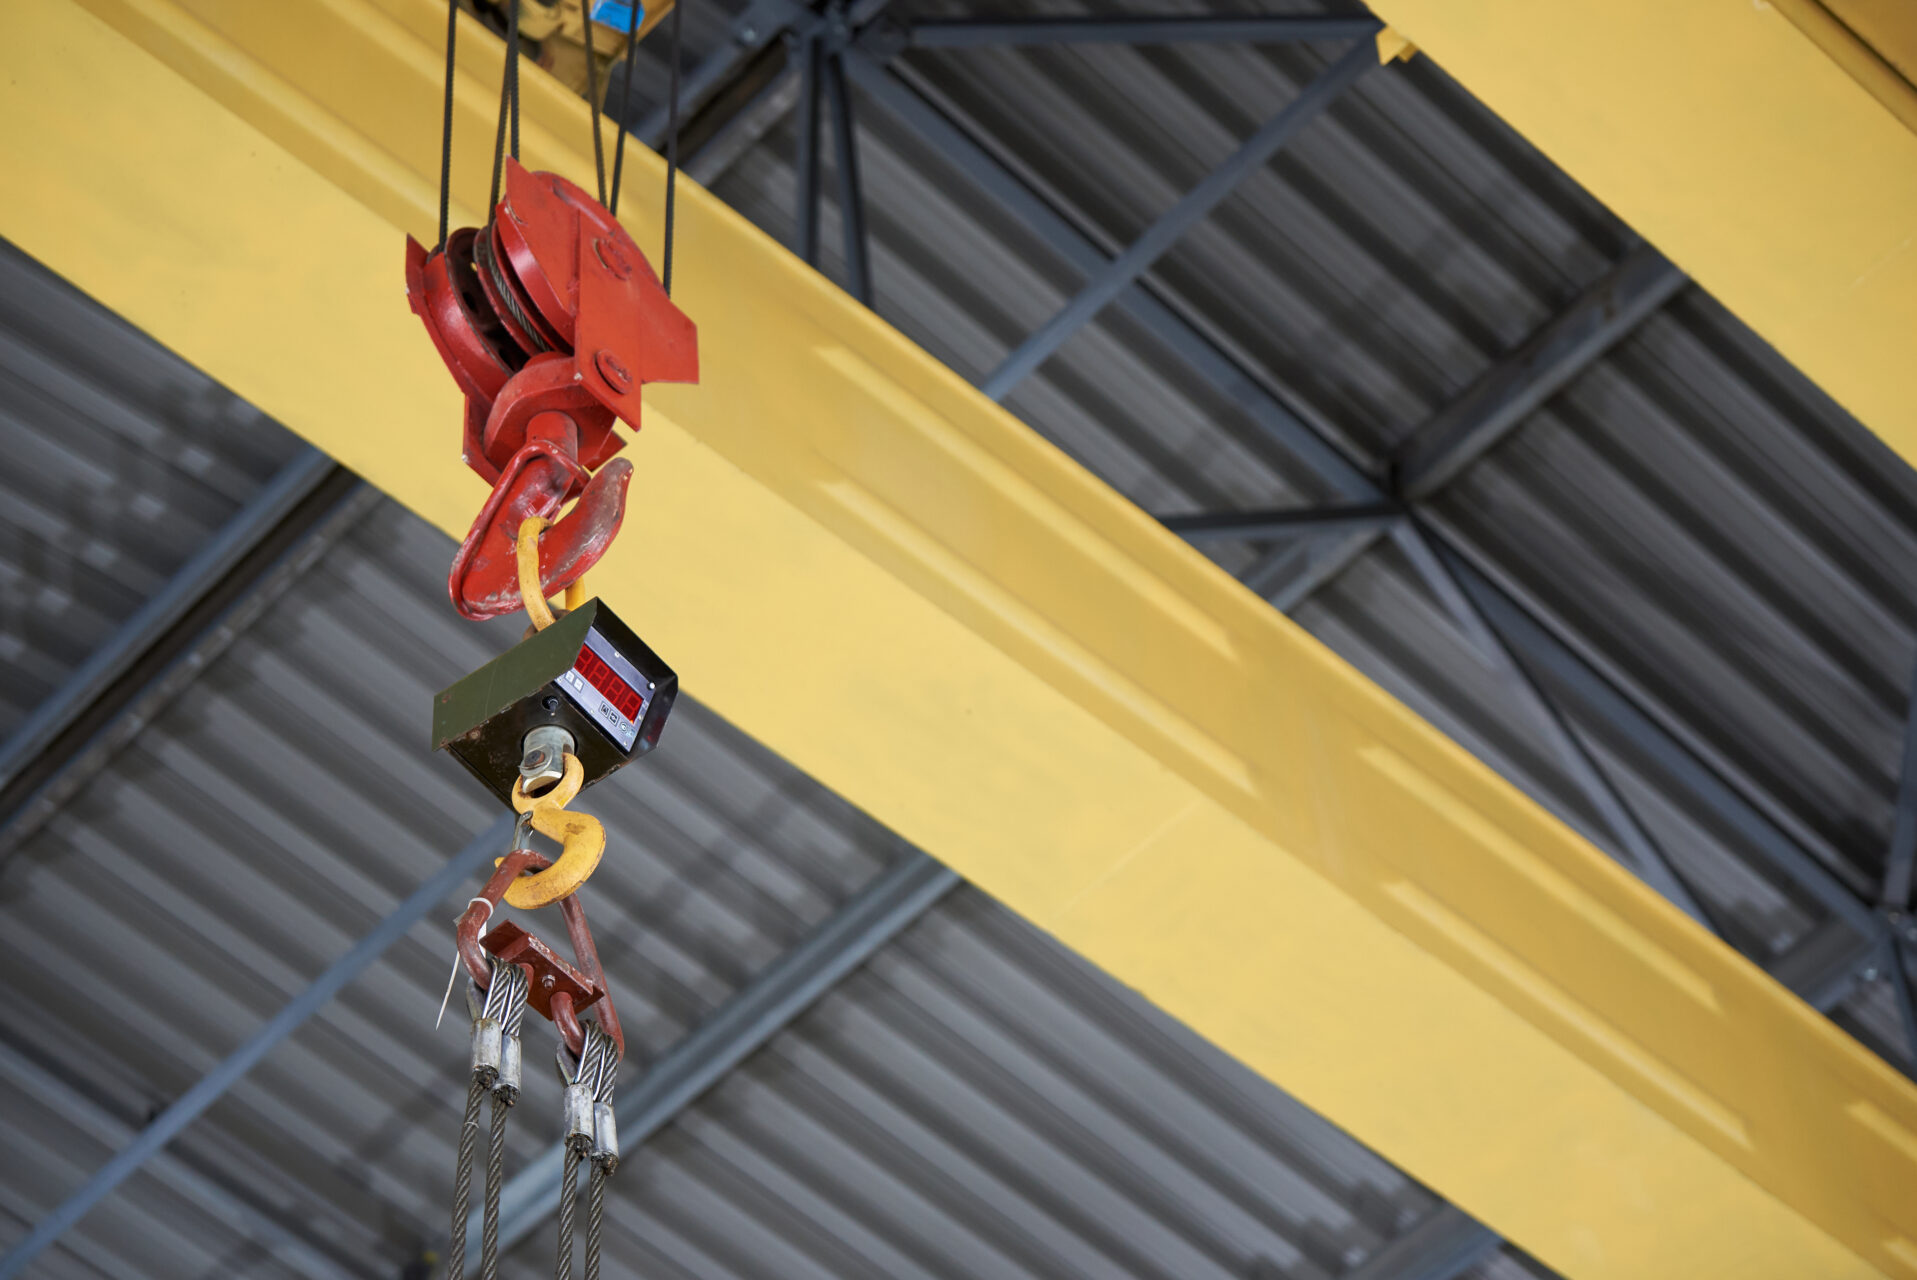 Hook of crane with hook load gauge


